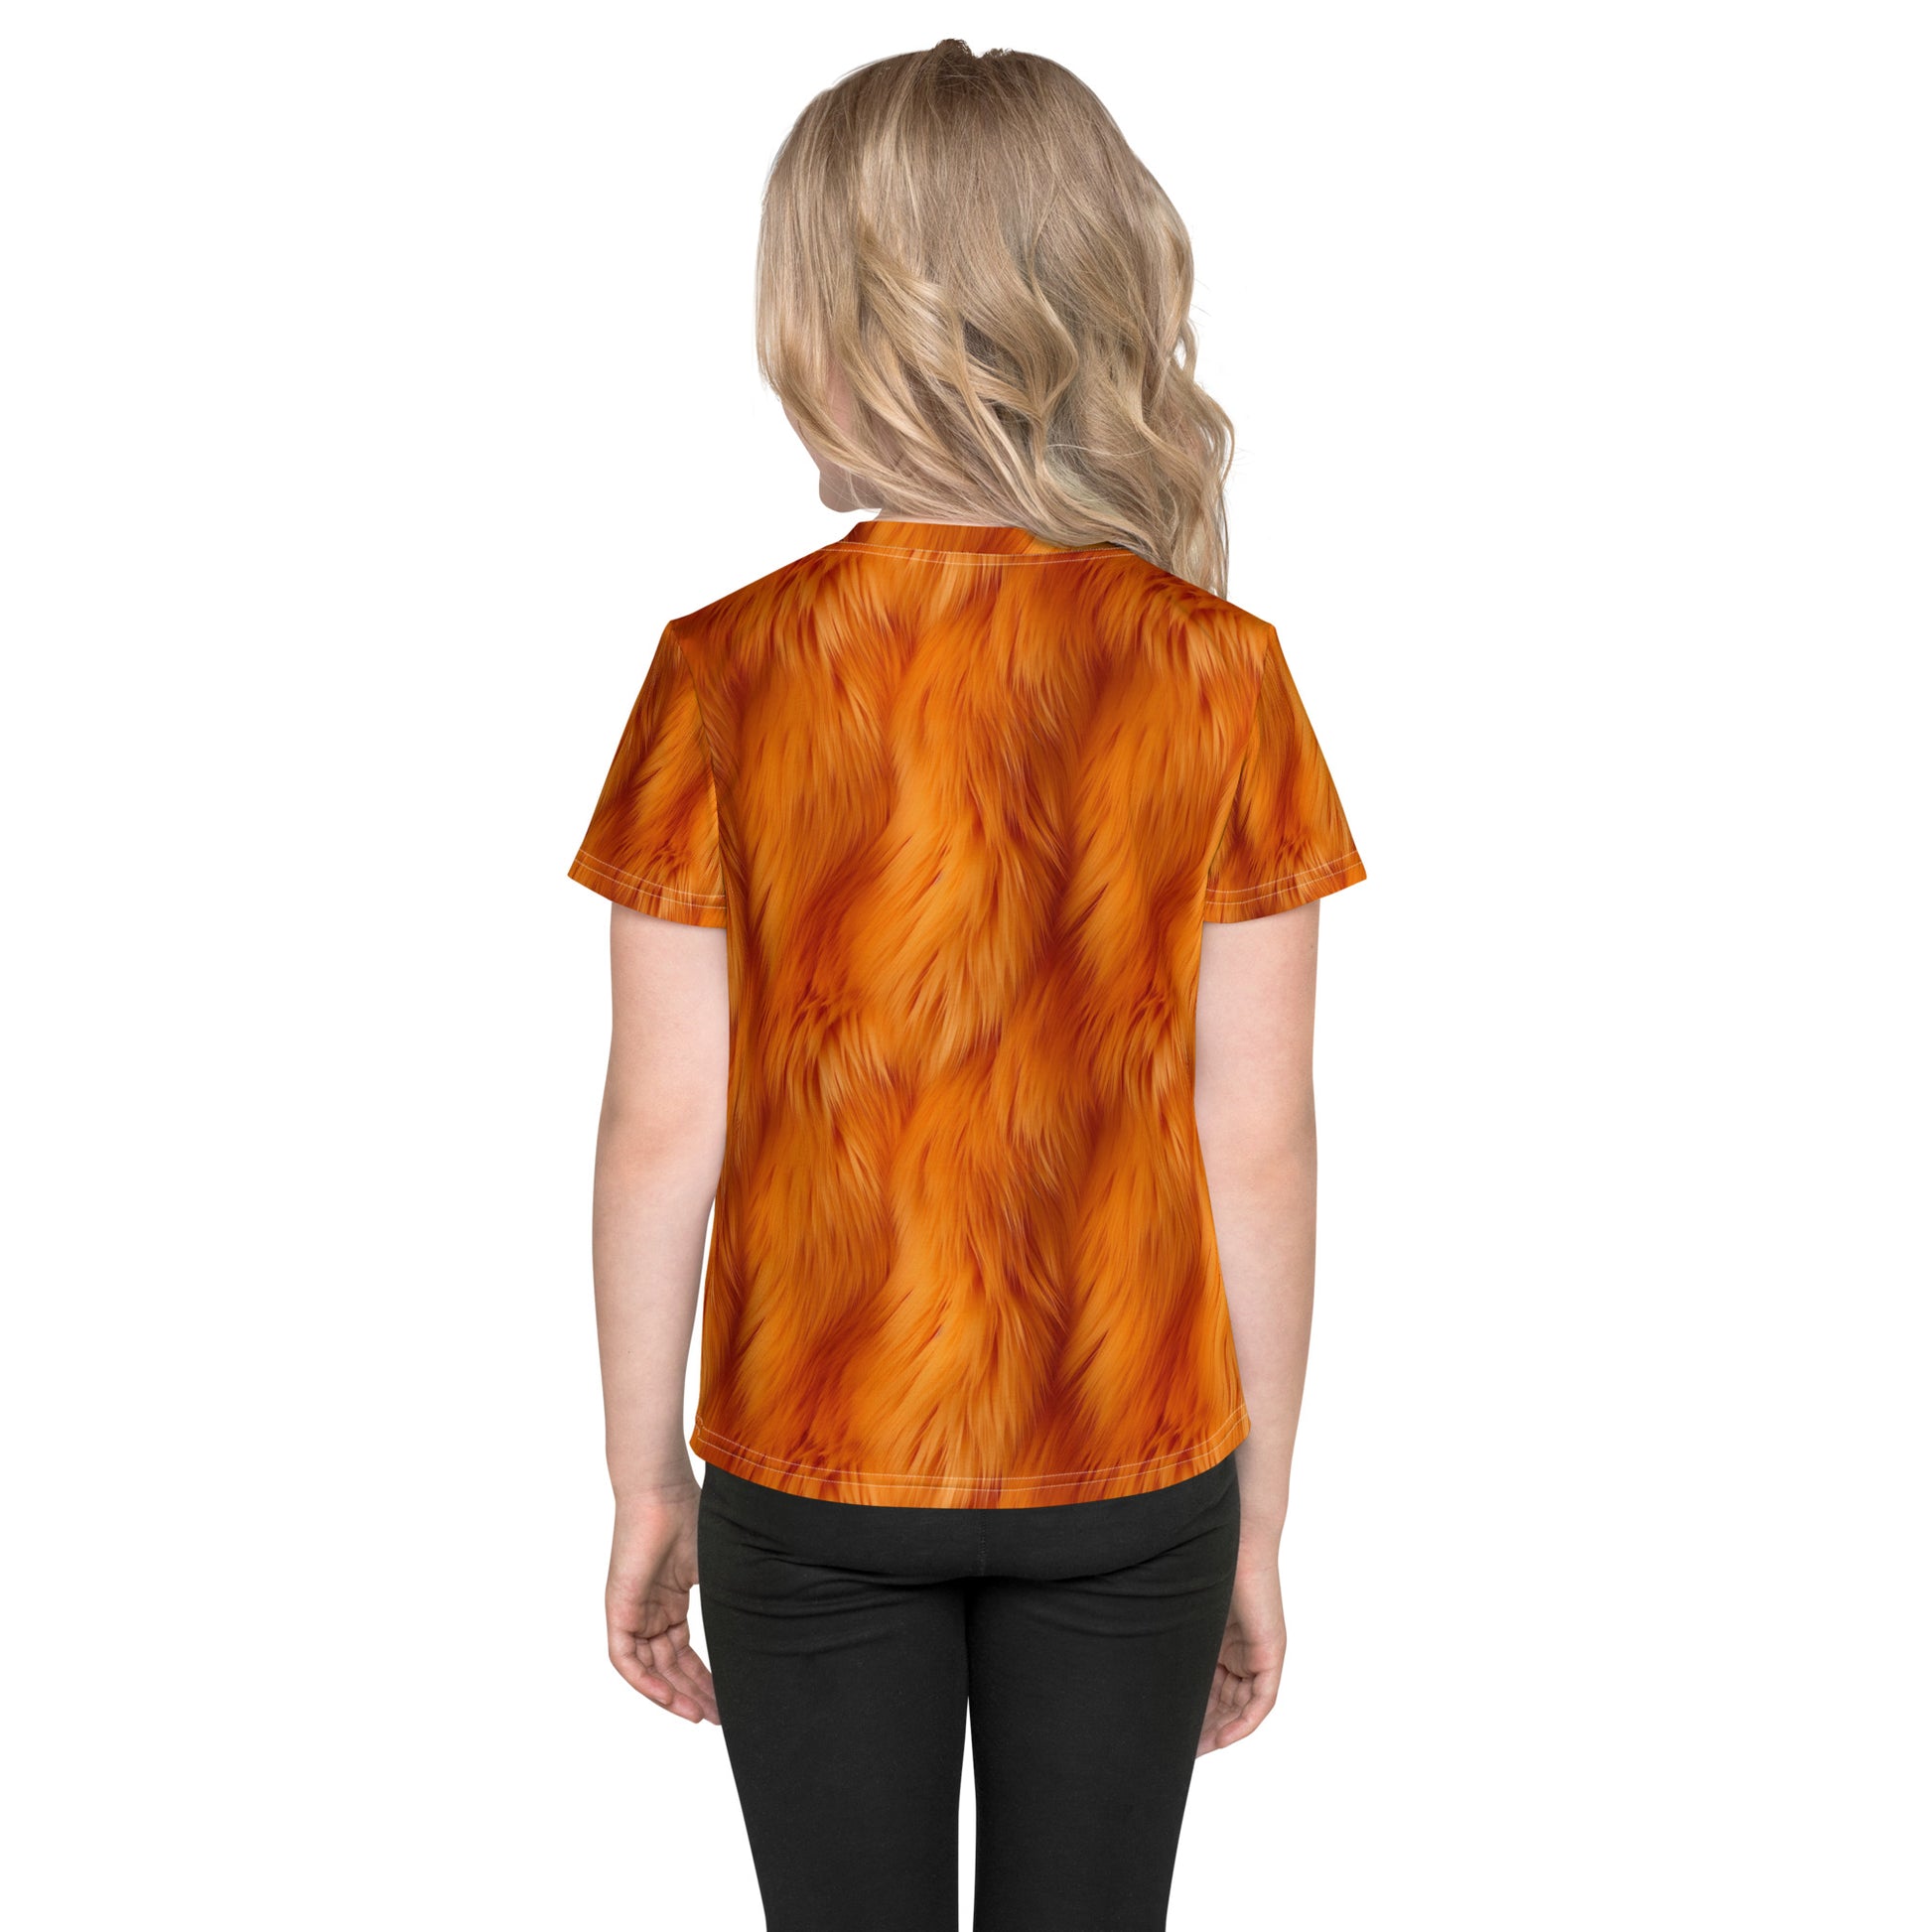 Orange Fox Fur Kids Tshirt, Halloween Costume Animal Print Boys Girls Youth Aesthetic Graphic Crewneck Tee Shirt Top Starcove Fashion